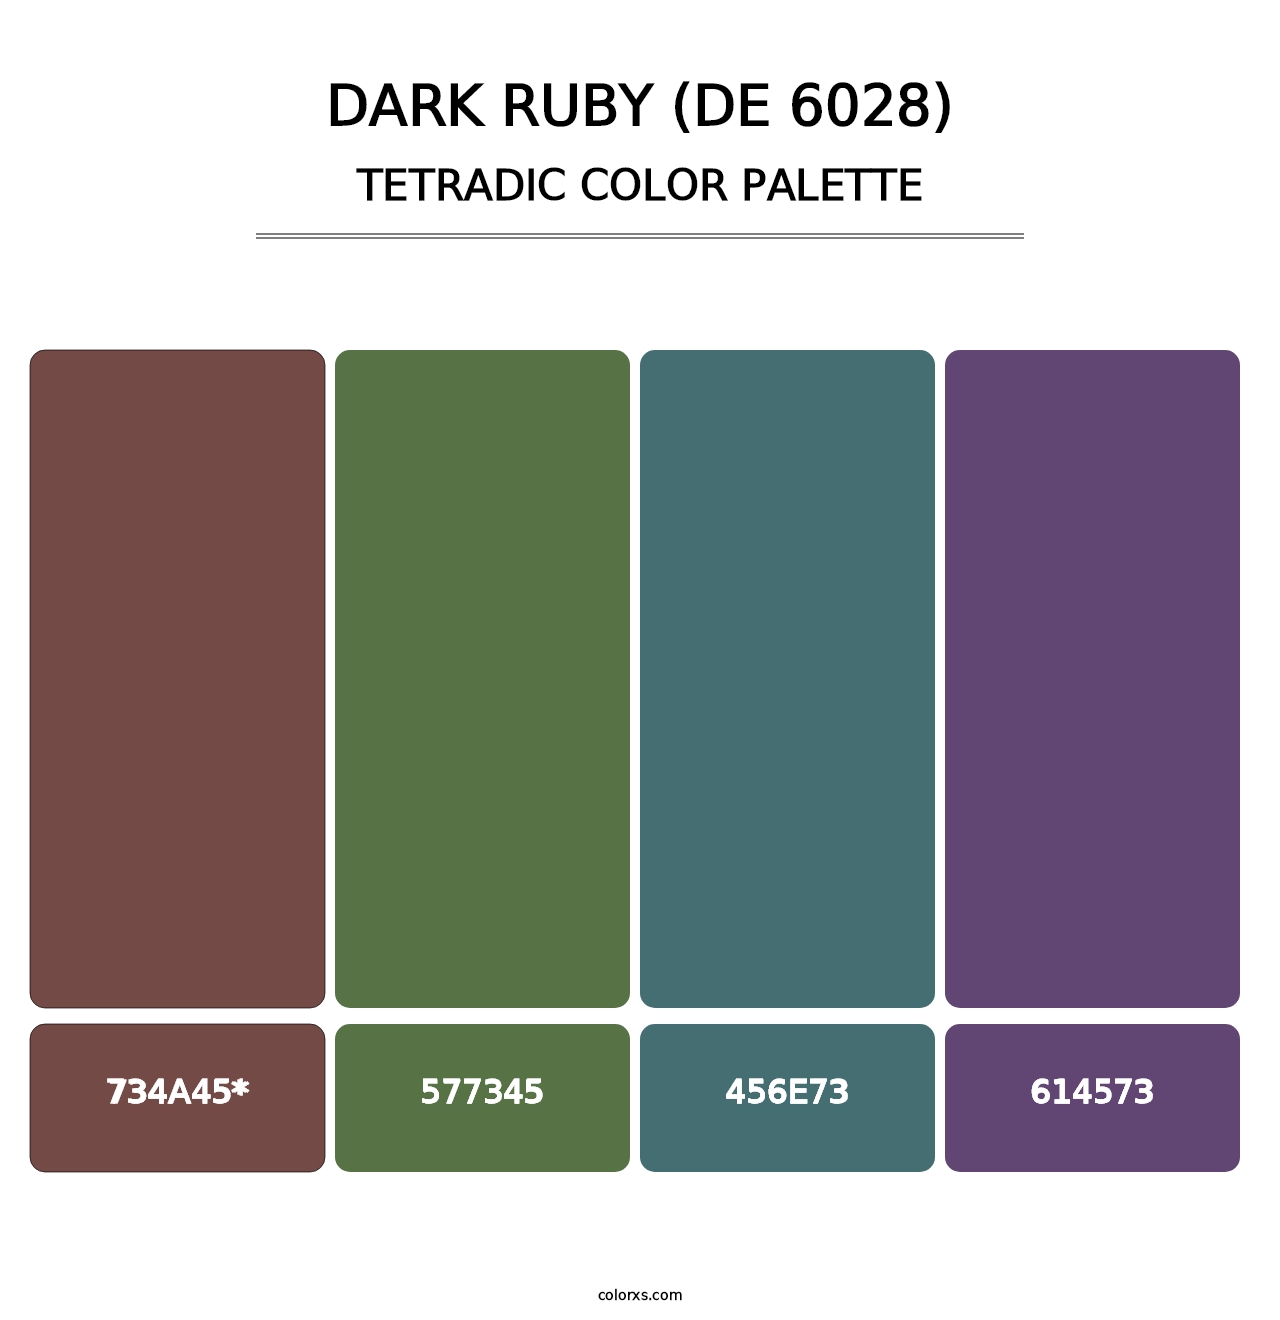 Dark Ruby (DE 6028) - Tetradic Color Palette